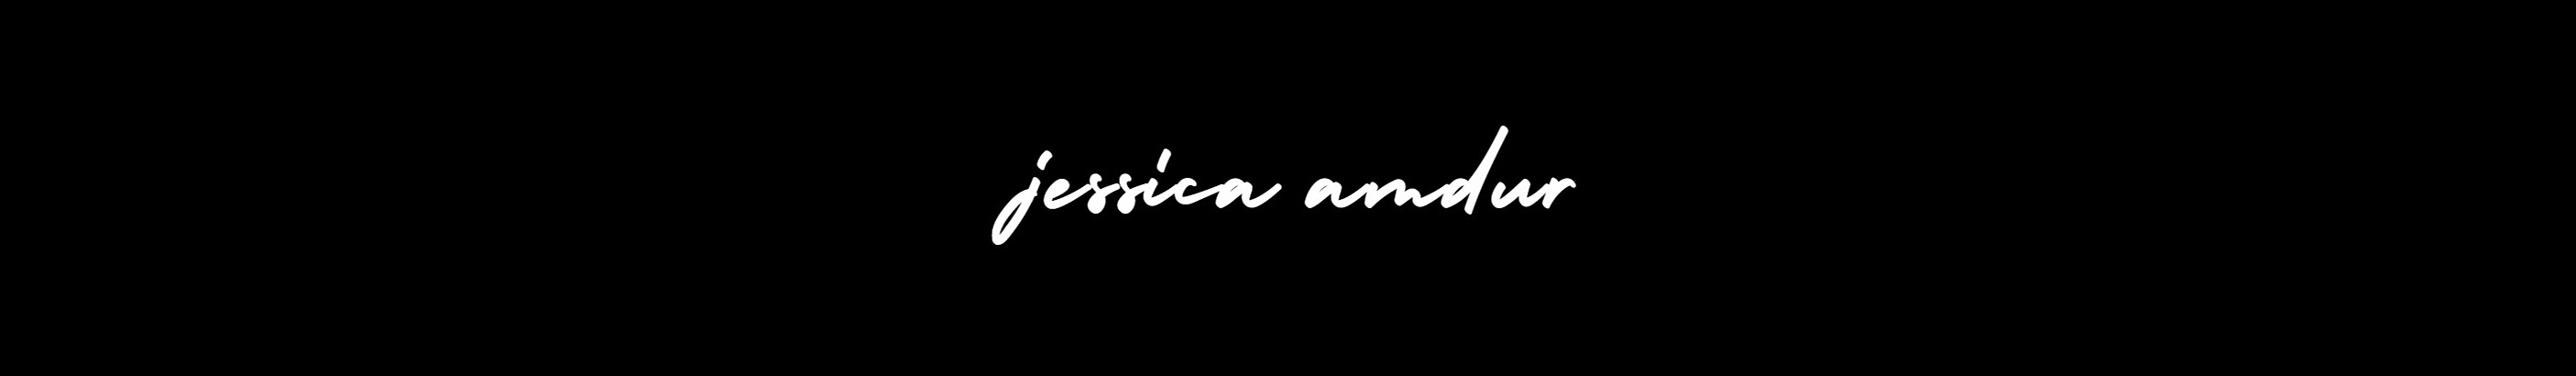 Jessica Amdur's profile banner